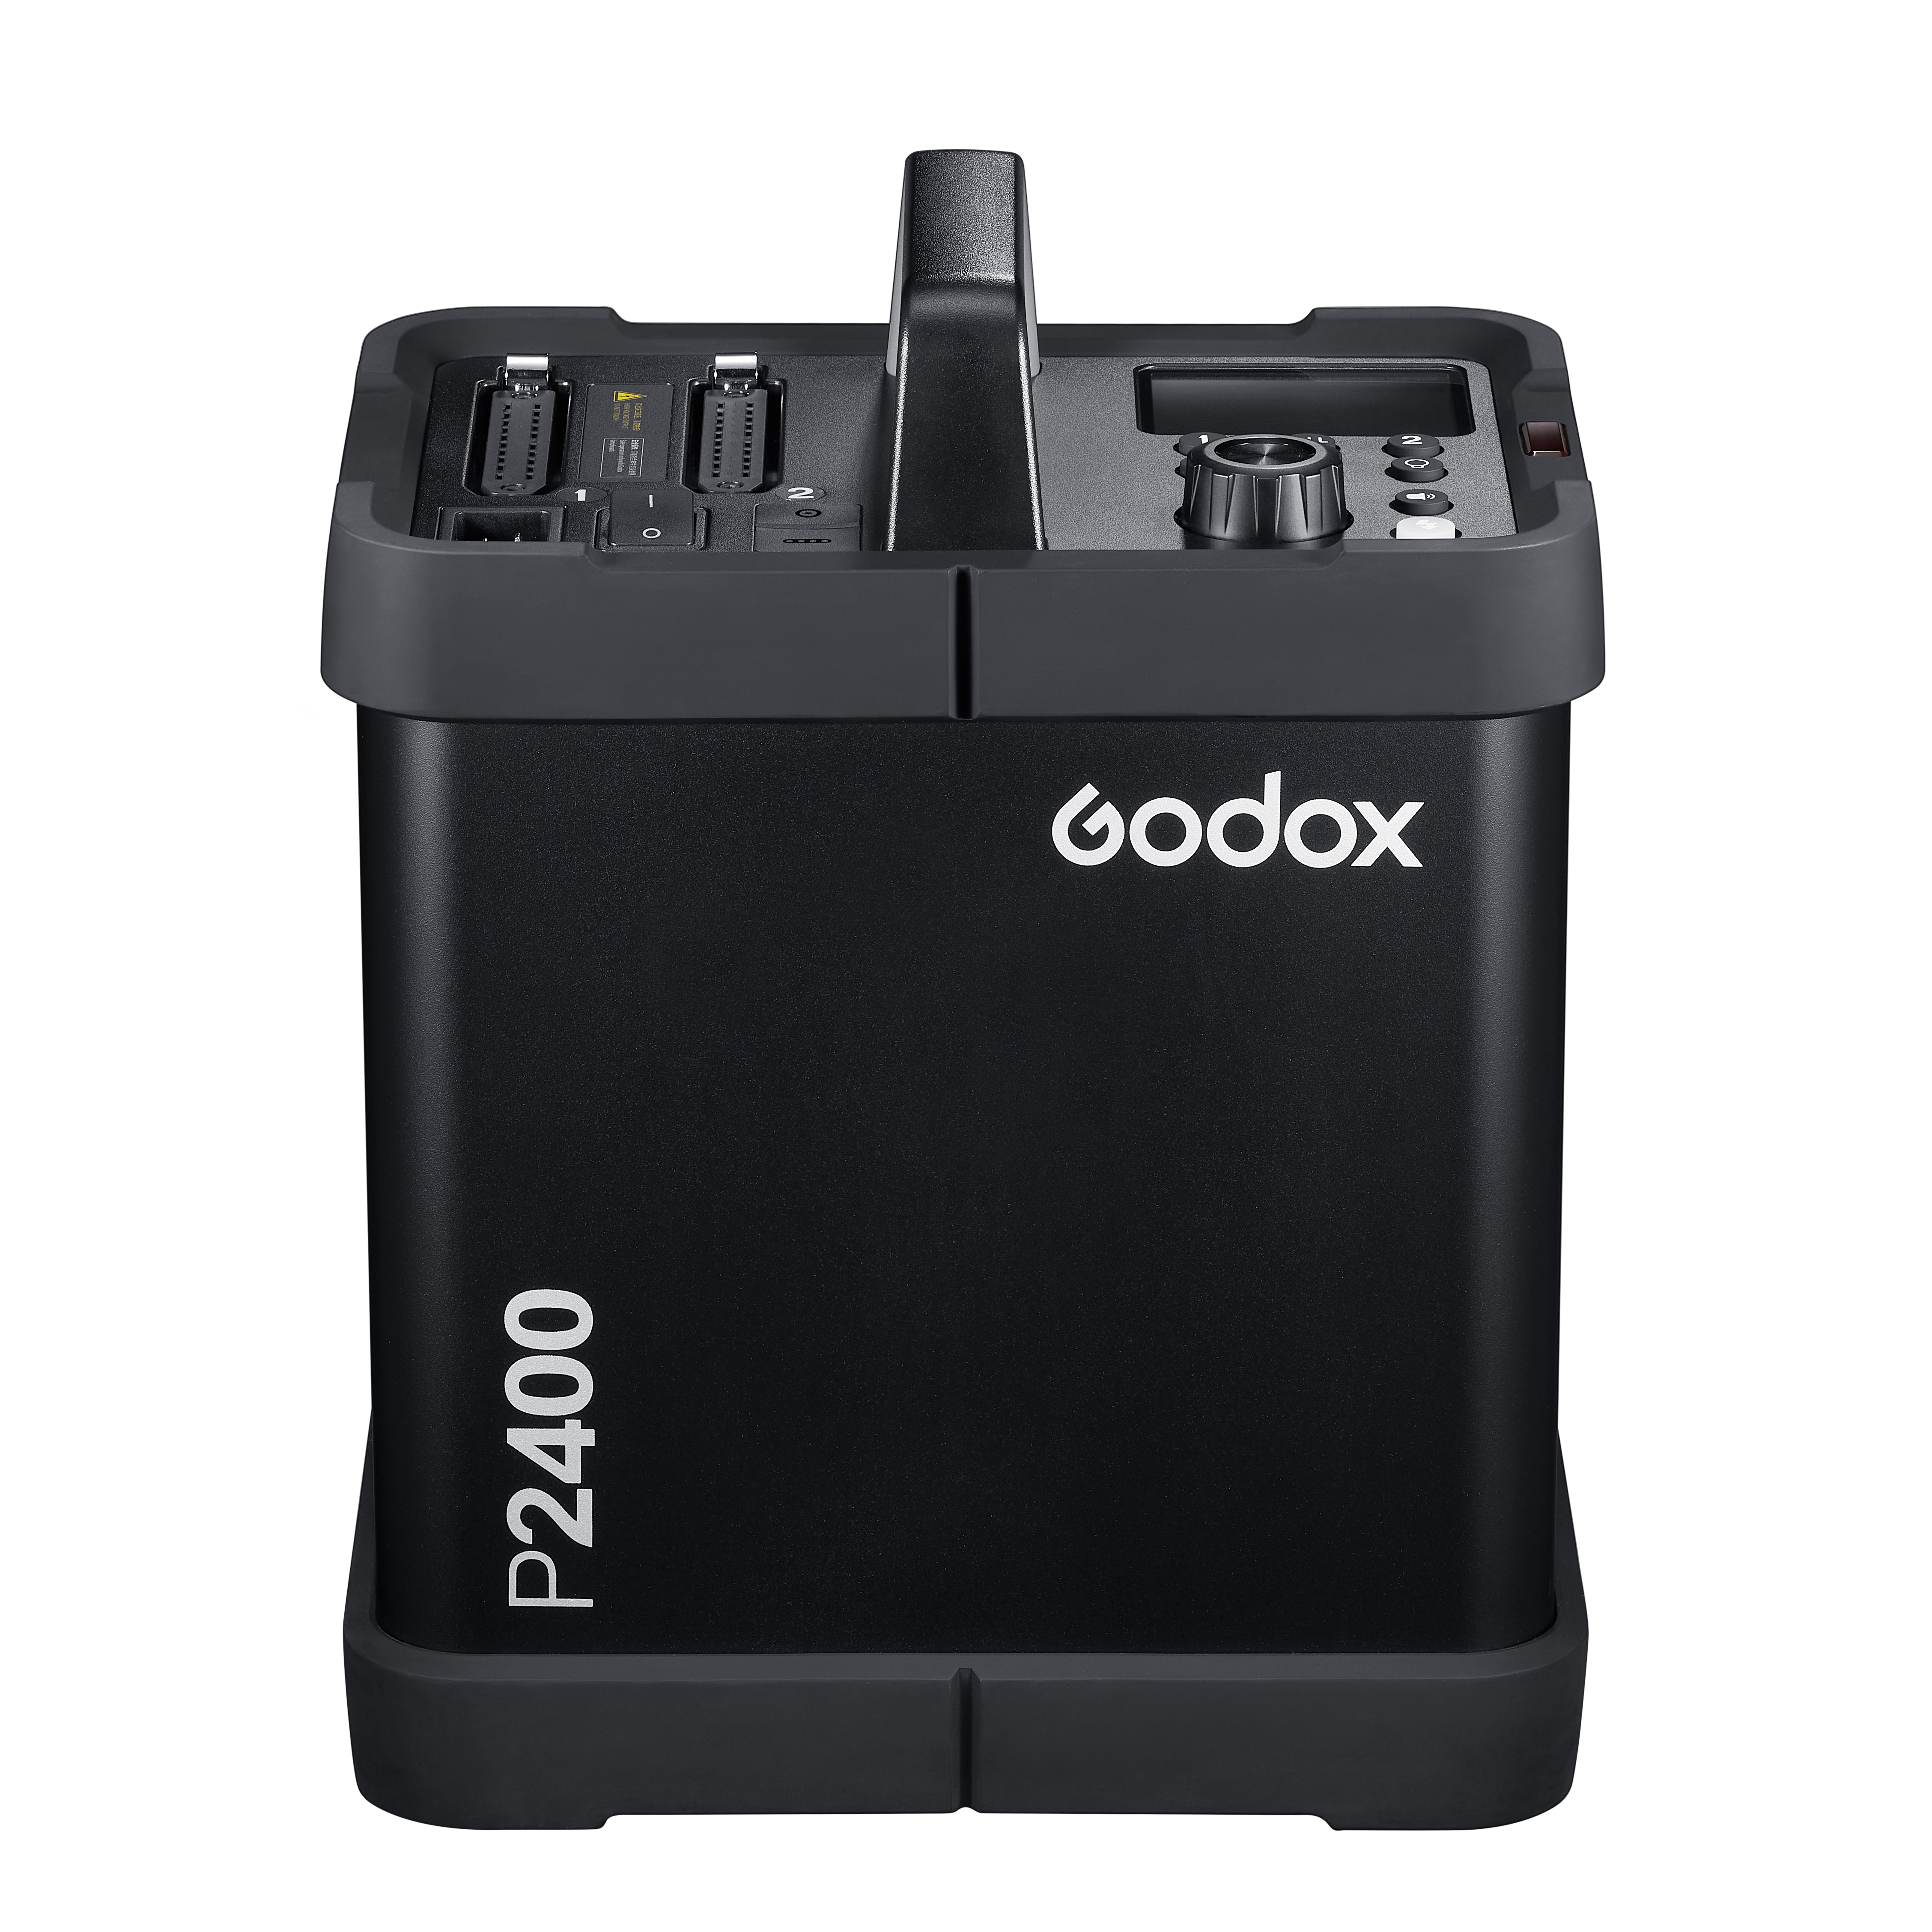 Генератор студийный Godox p2400. Godox p2400. Godox p2400 Power Pack Kit. P2400. 2400 дж